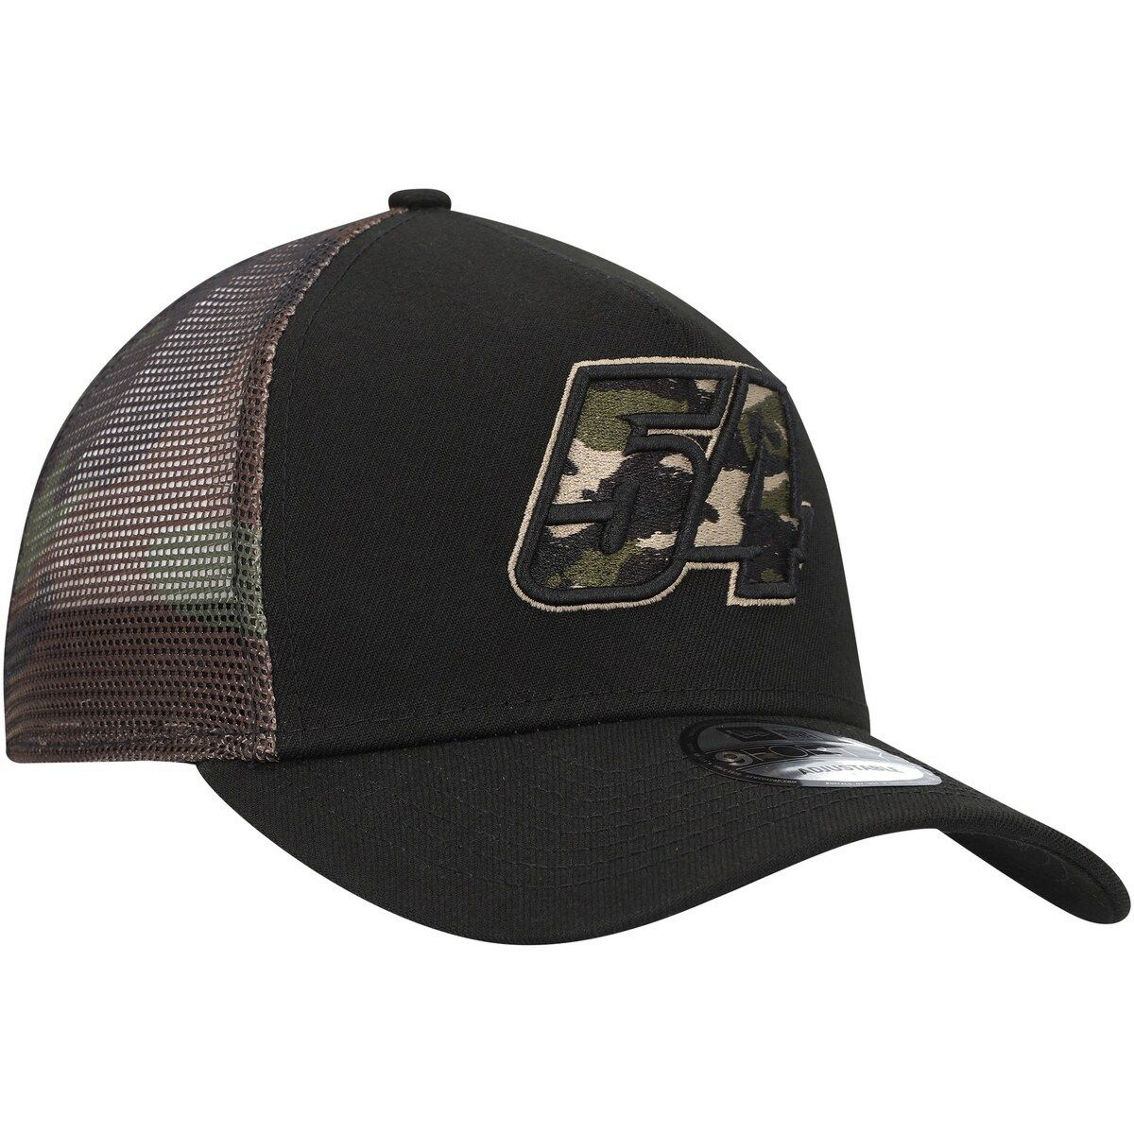 New Era Men's Black/Camo Ty Gibbs A-Frame Trucker 9FORTY Snapback Hat - Image 4 of 4